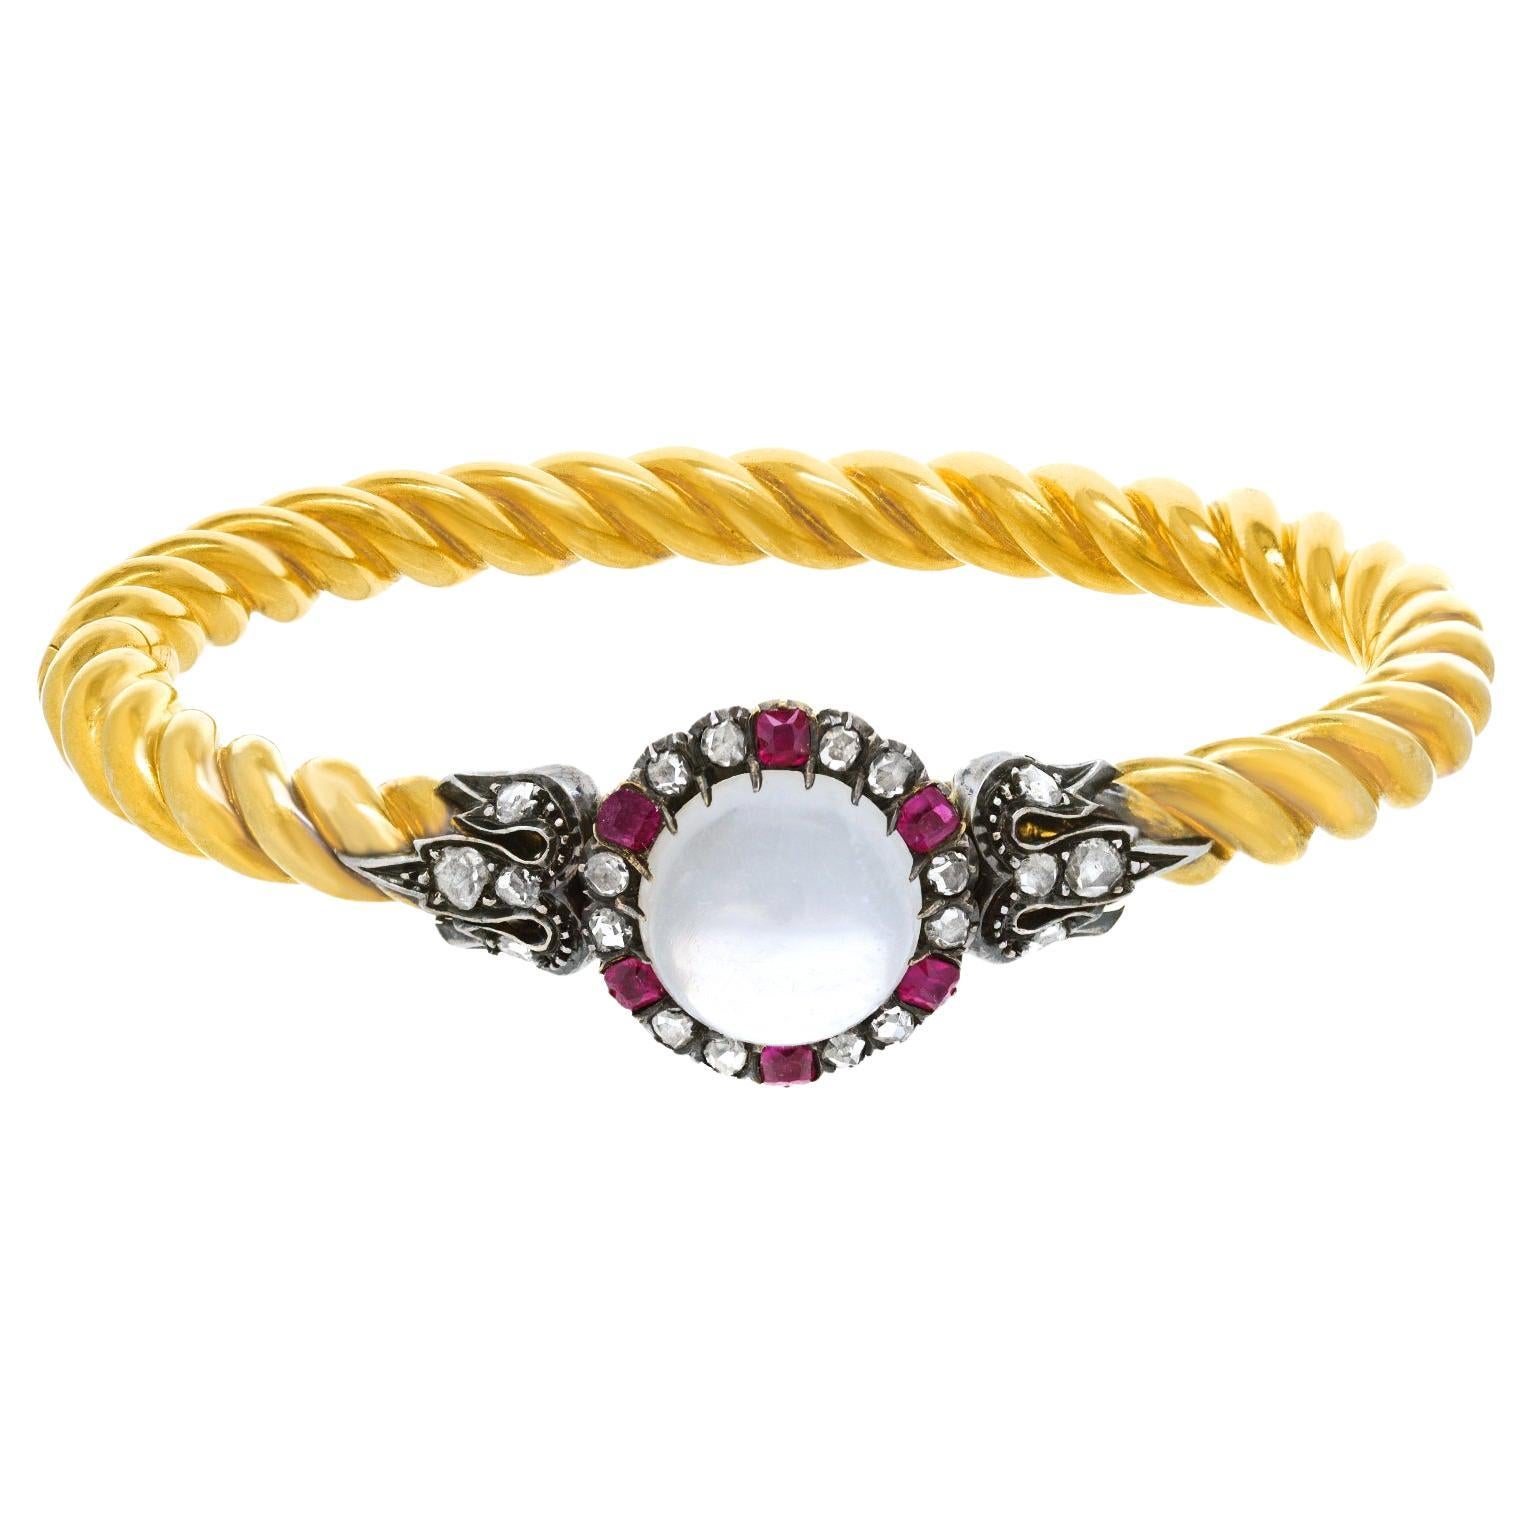 Moonstone, Ruby and Diamond Bracelet 18k c1870s France